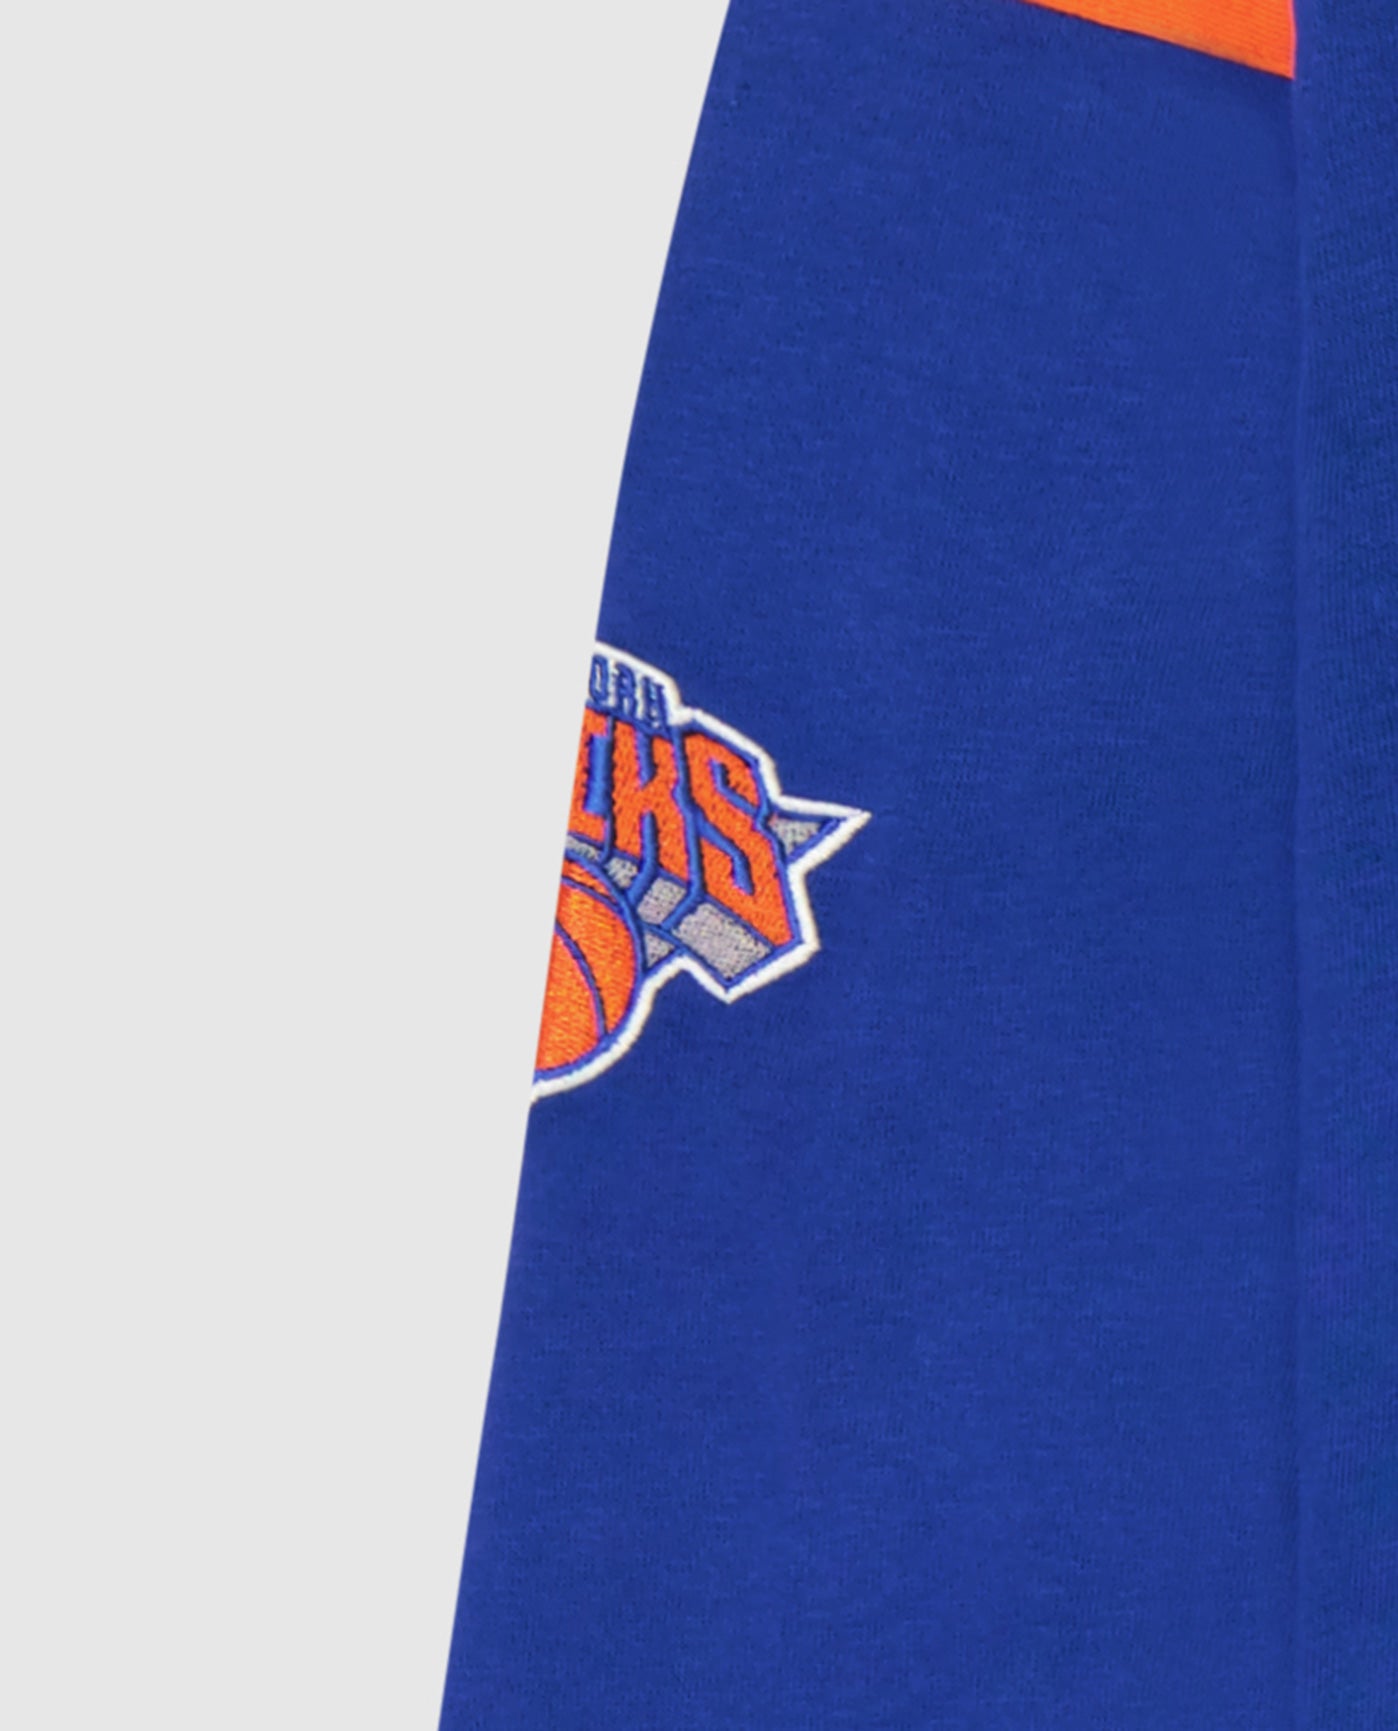 New York Knicks logo on the sleeves | Knicks Blue